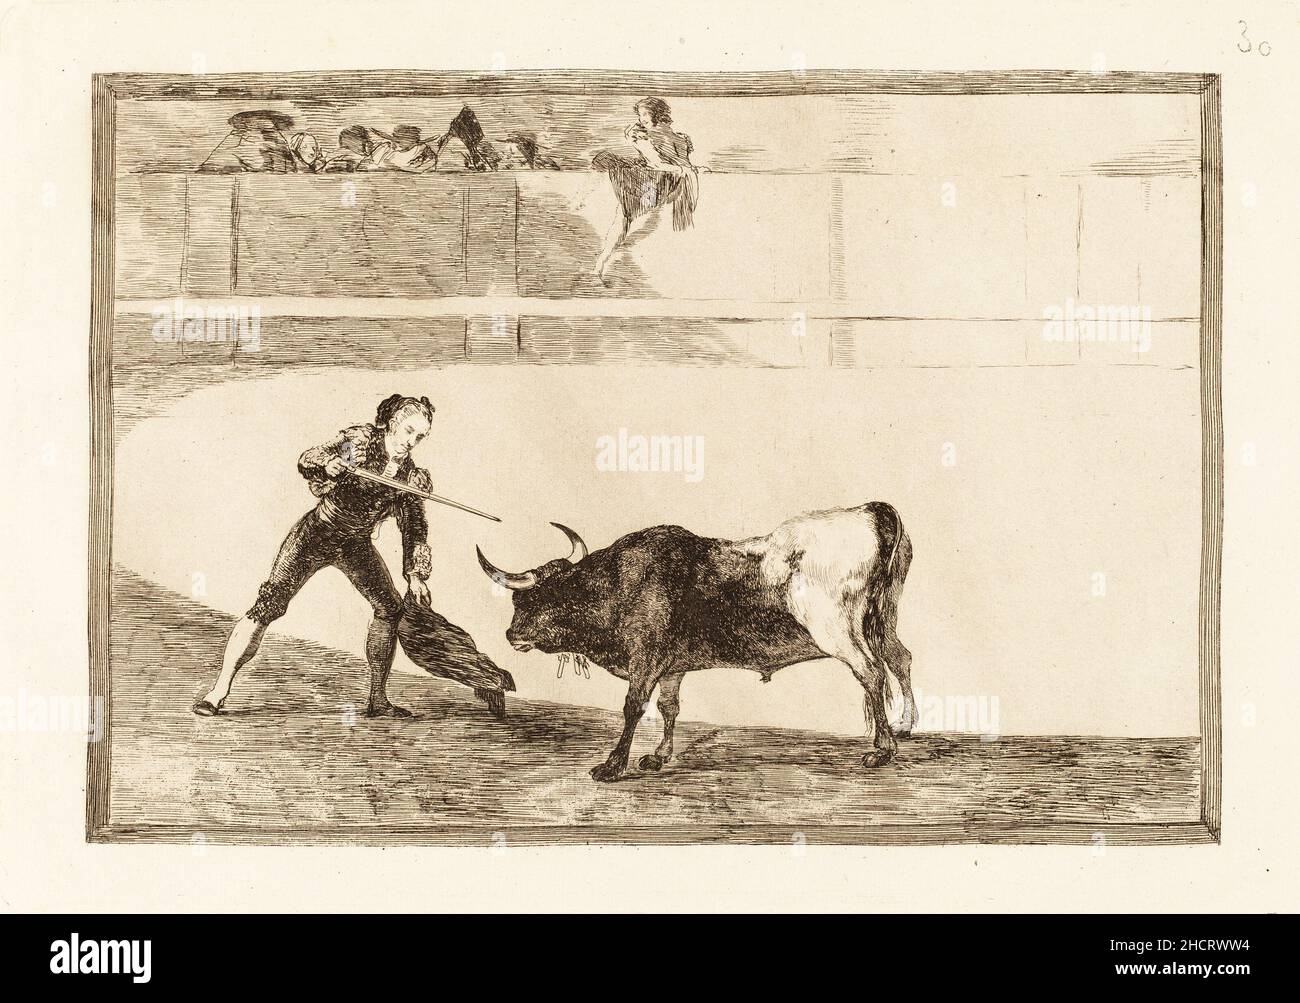 Francisco de Goya, Pedro Romero matado a toro parado (Pedro Romero tuant le taureau interrompu).Il s'agit de l'impression numéro 30 dans une série d'impression 33 sur la corrida. Banque D'Images